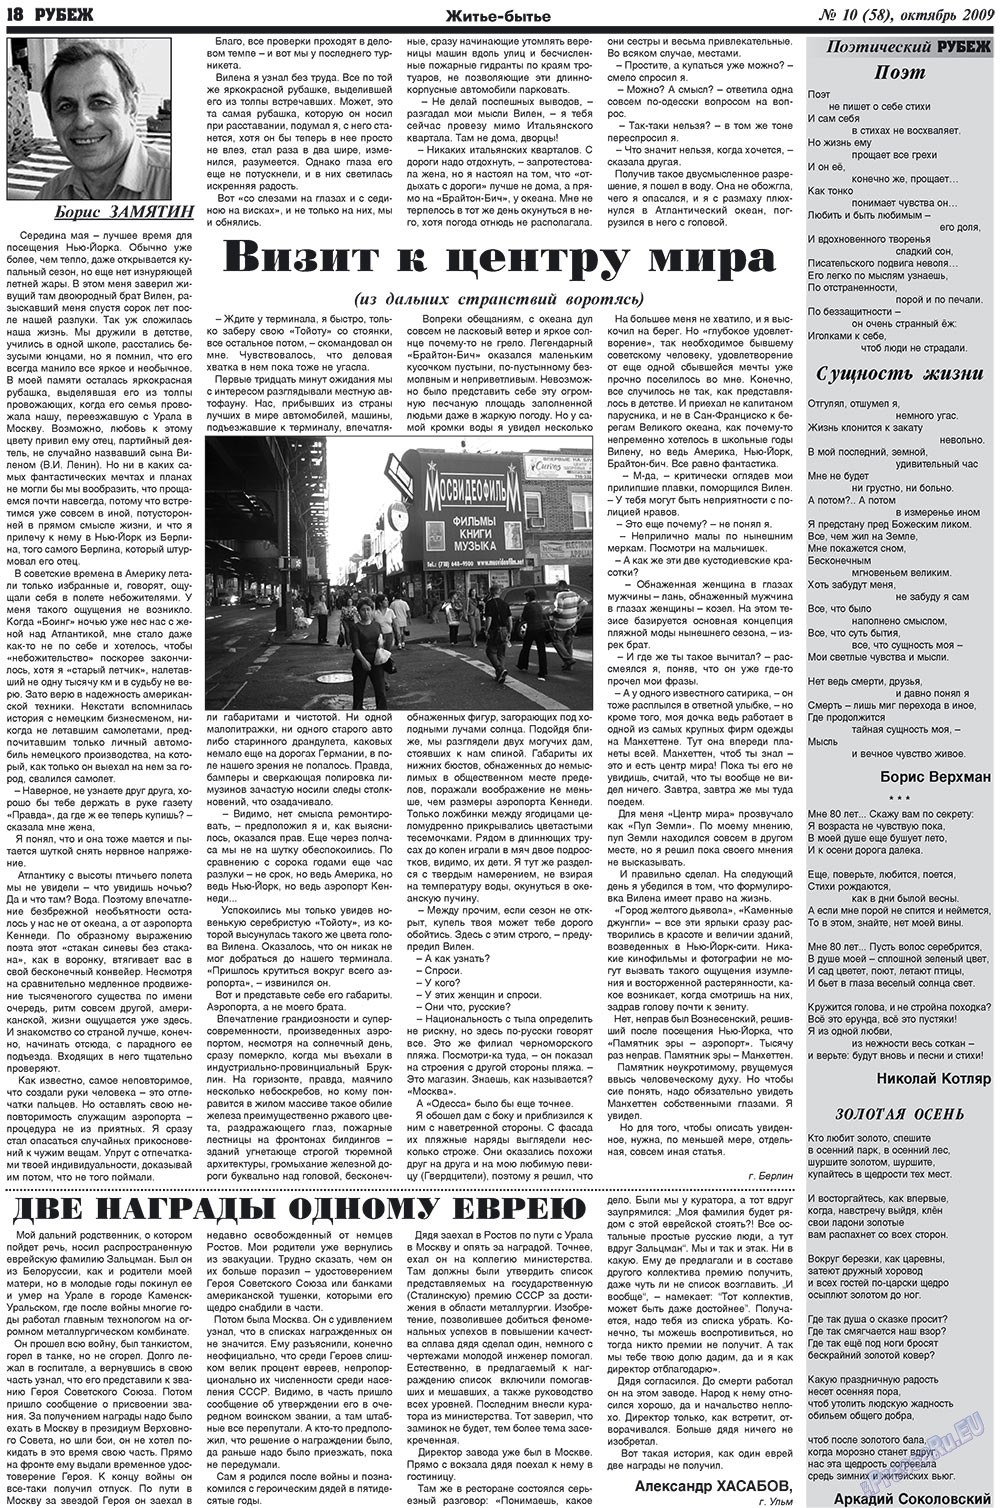 Рубеж, газета. 2009 №10 стр.18